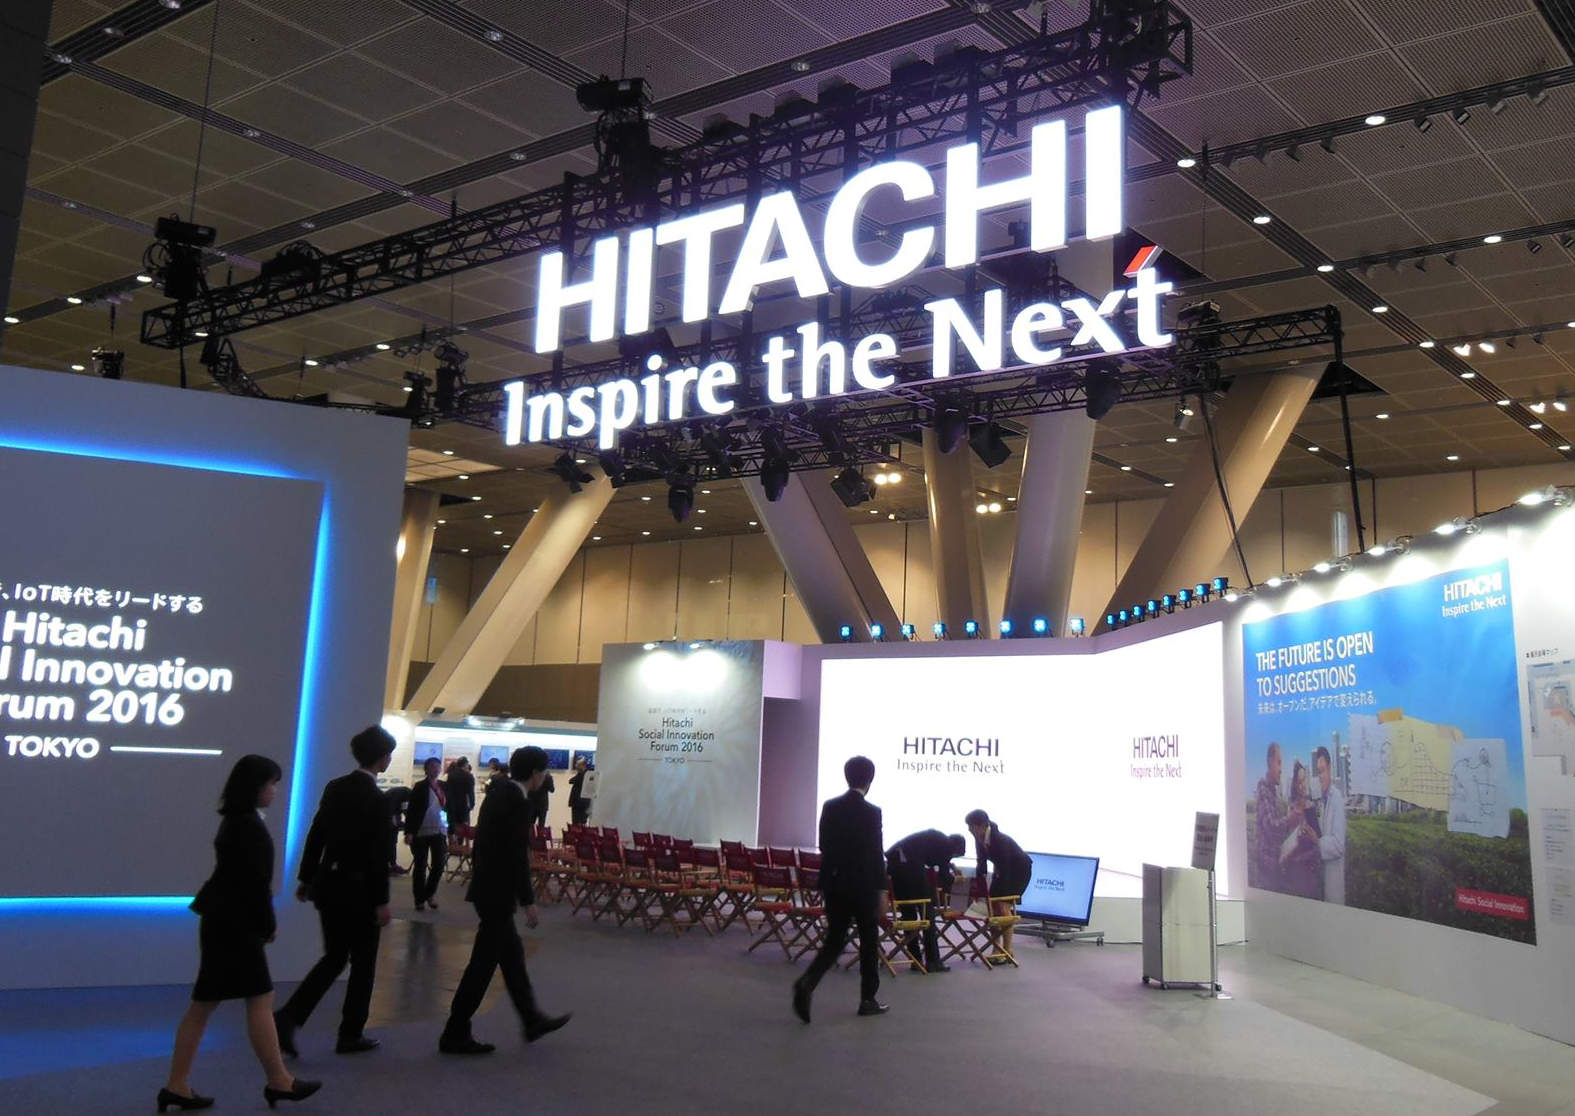 Hitachi Capital sets up vendor finance subsidiary in Amsterdam